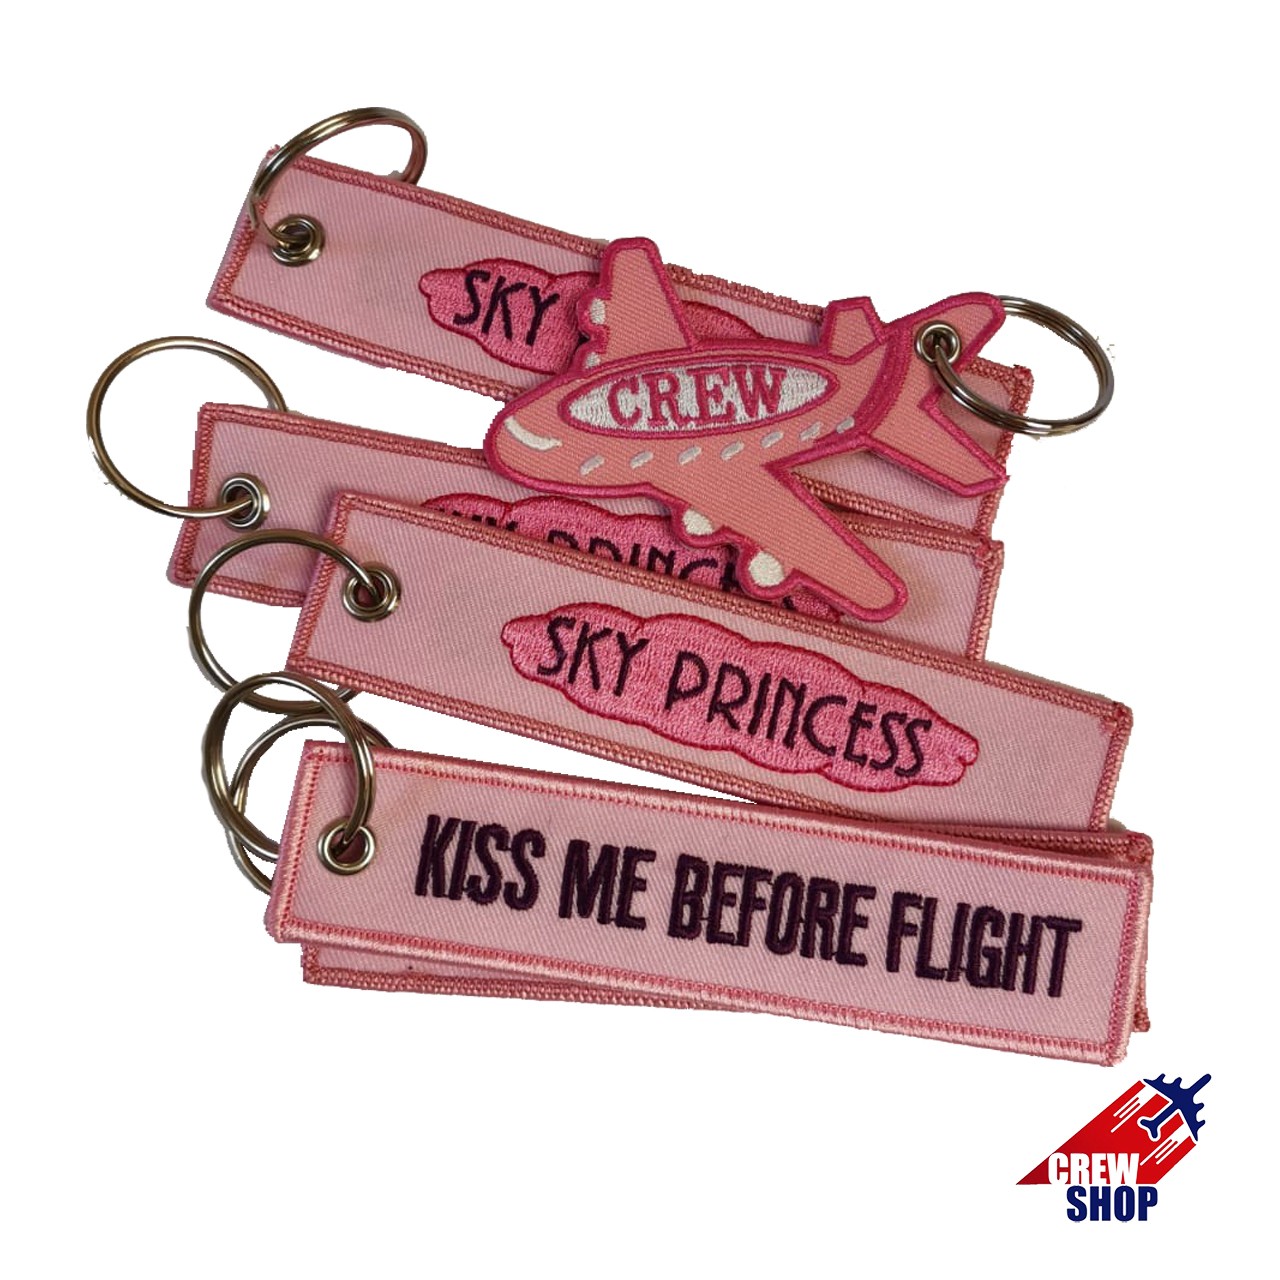 SKY PRINCESS-KISS ME BEFORE FLIGHT 